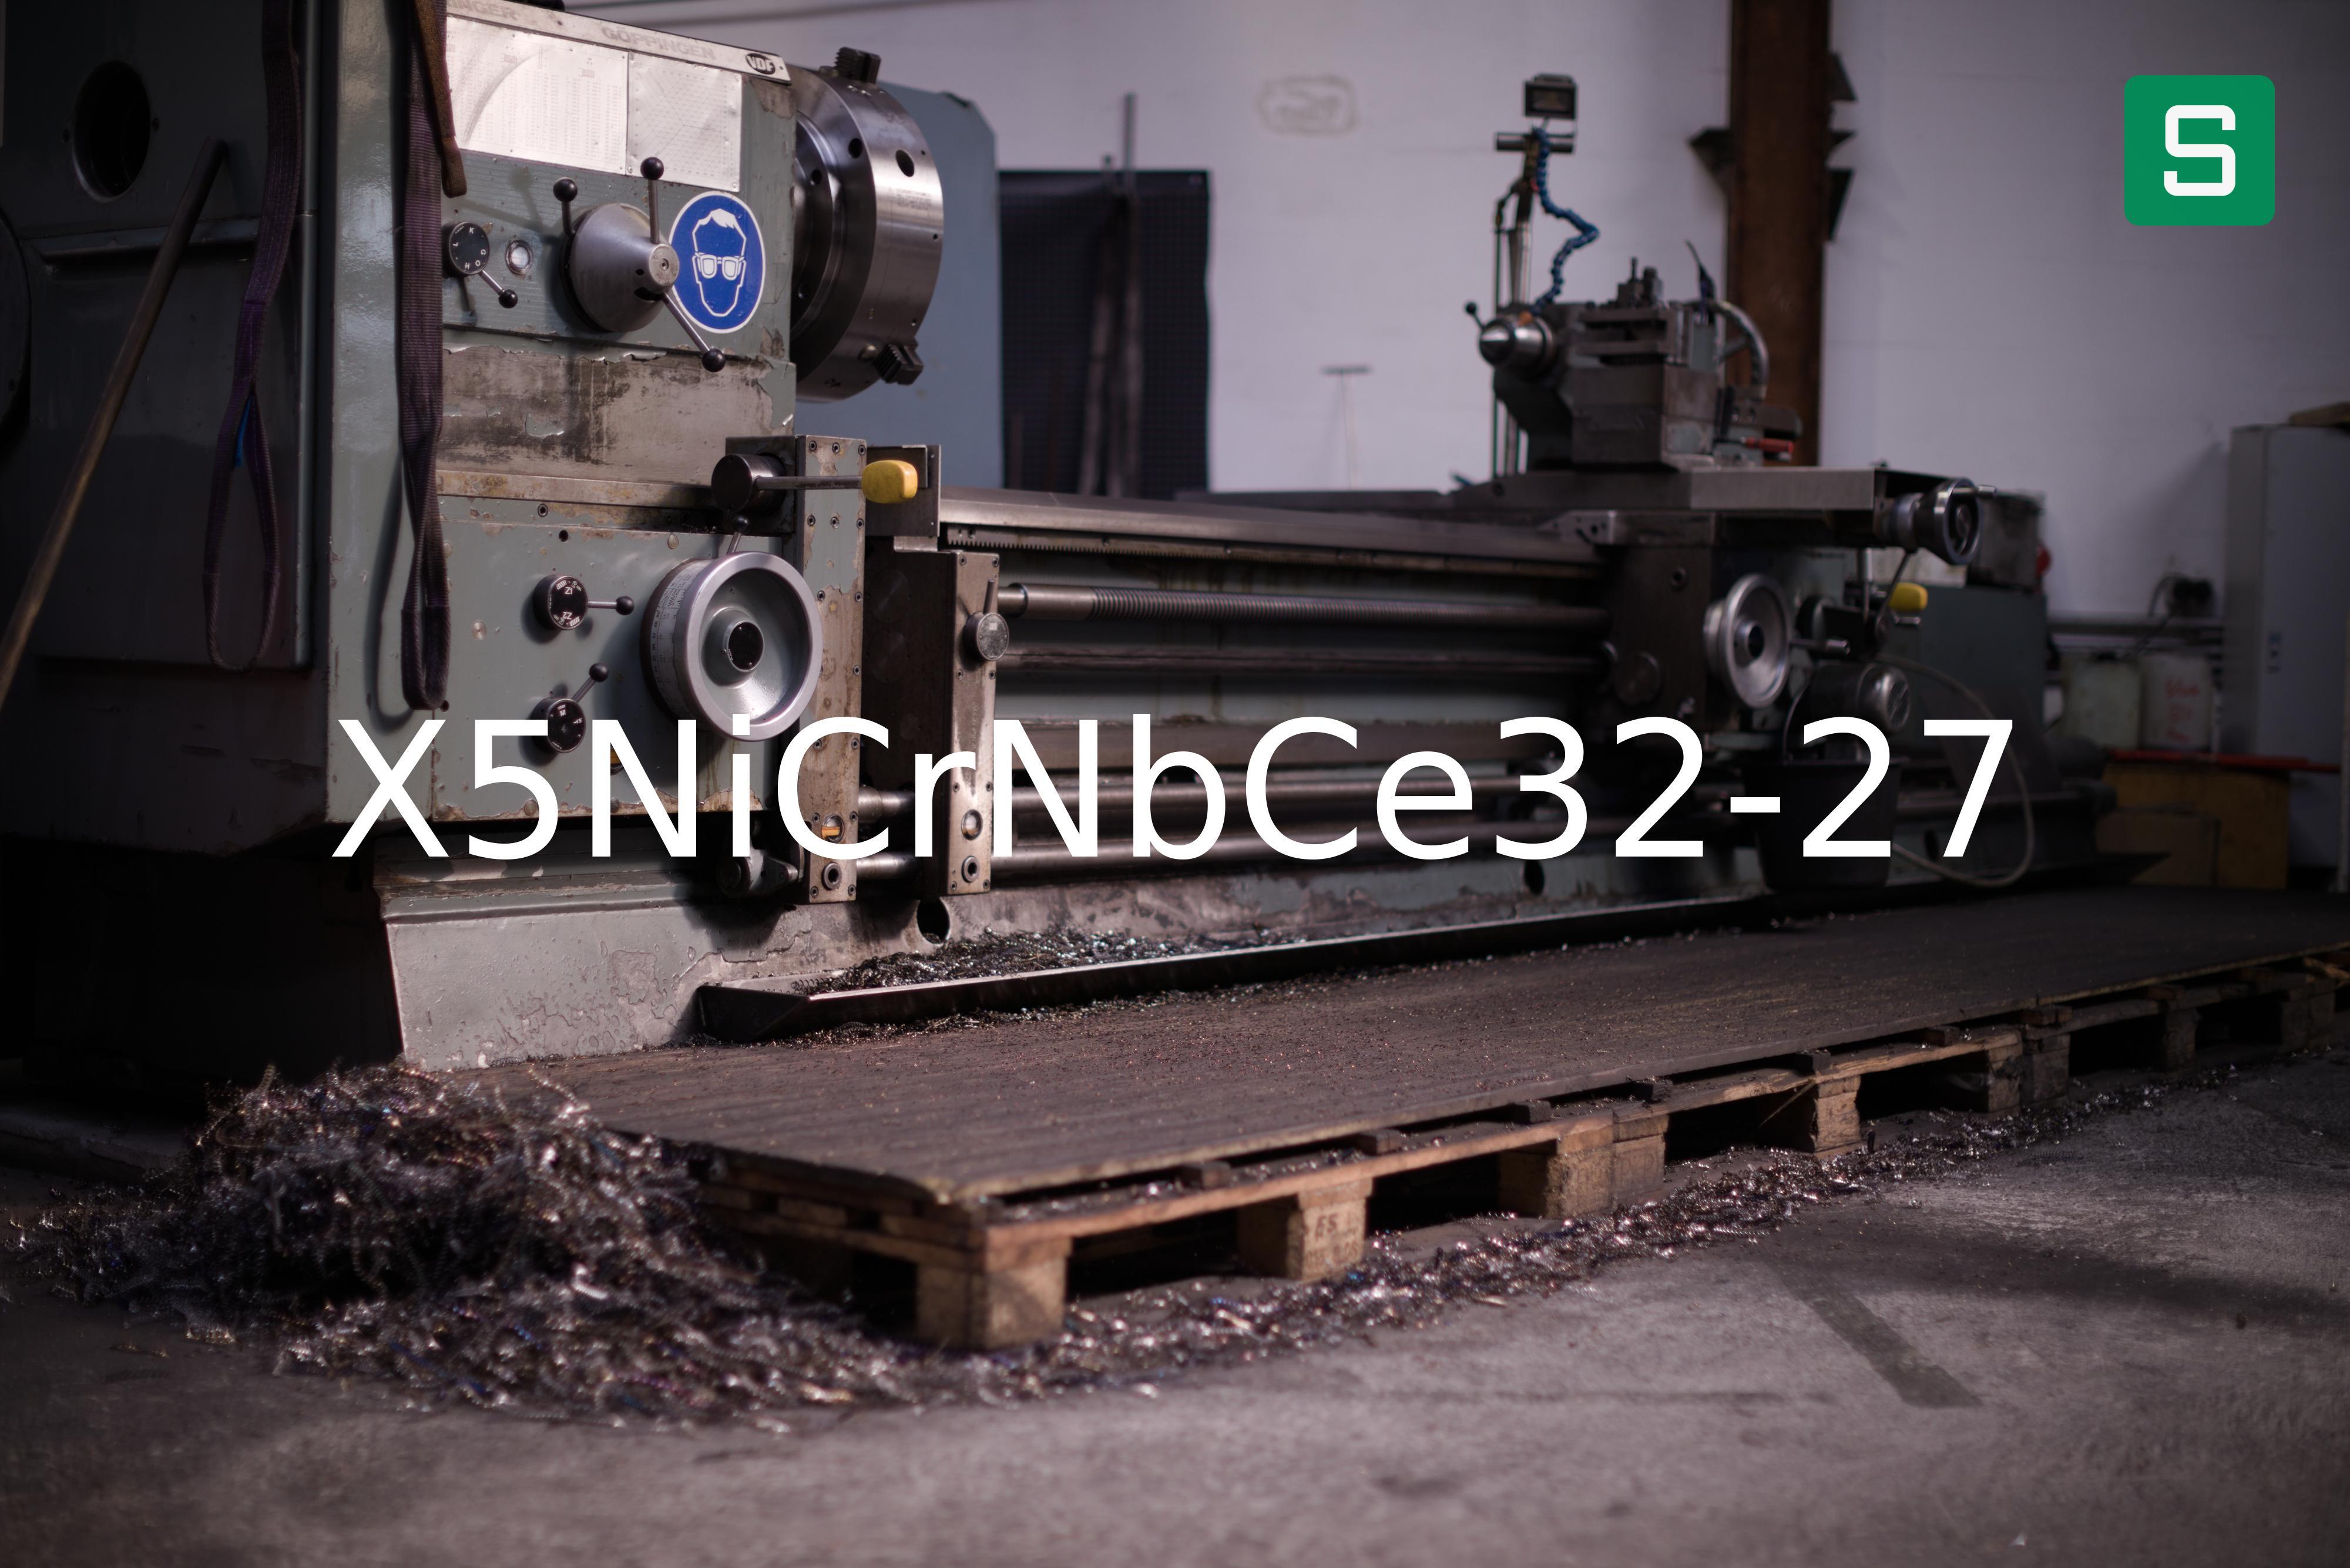 Stahlwerkstoff: X5NiCrNbCe32-27